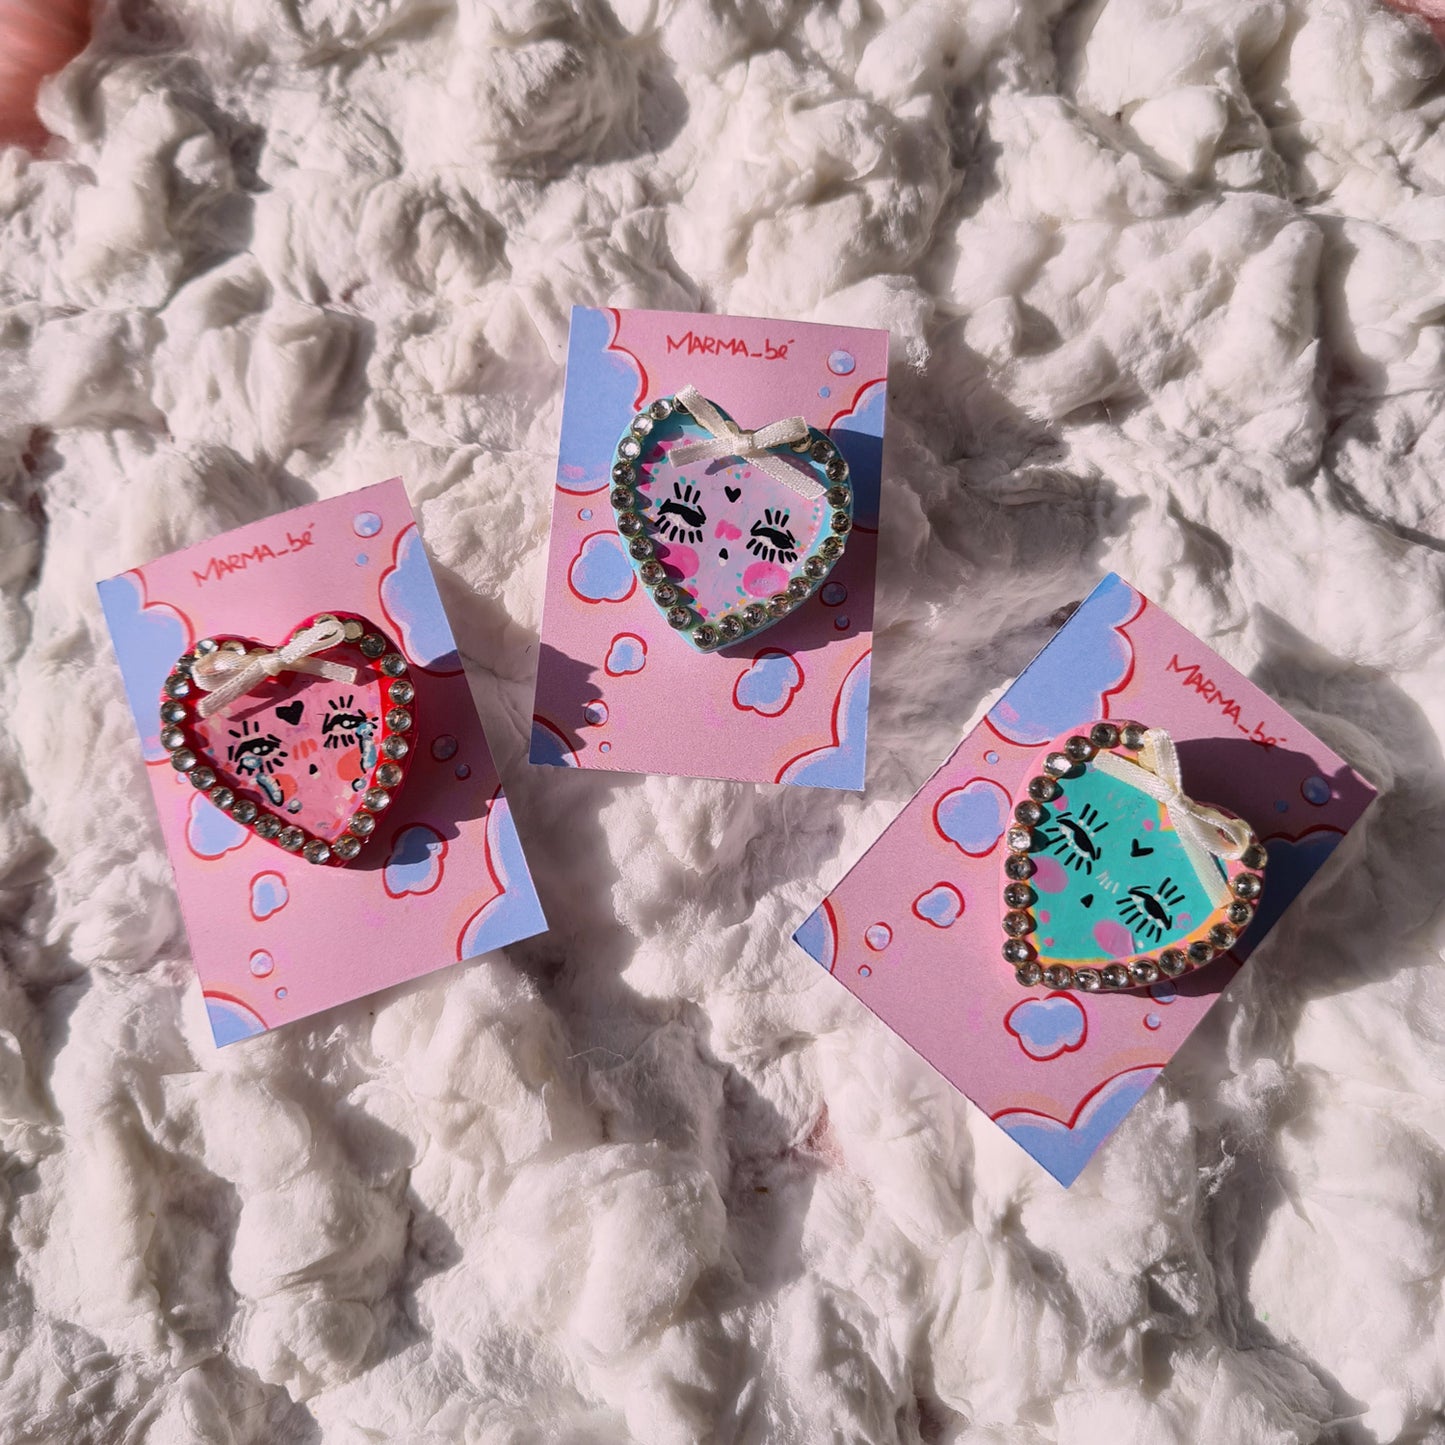 Heart and Star handmade pins